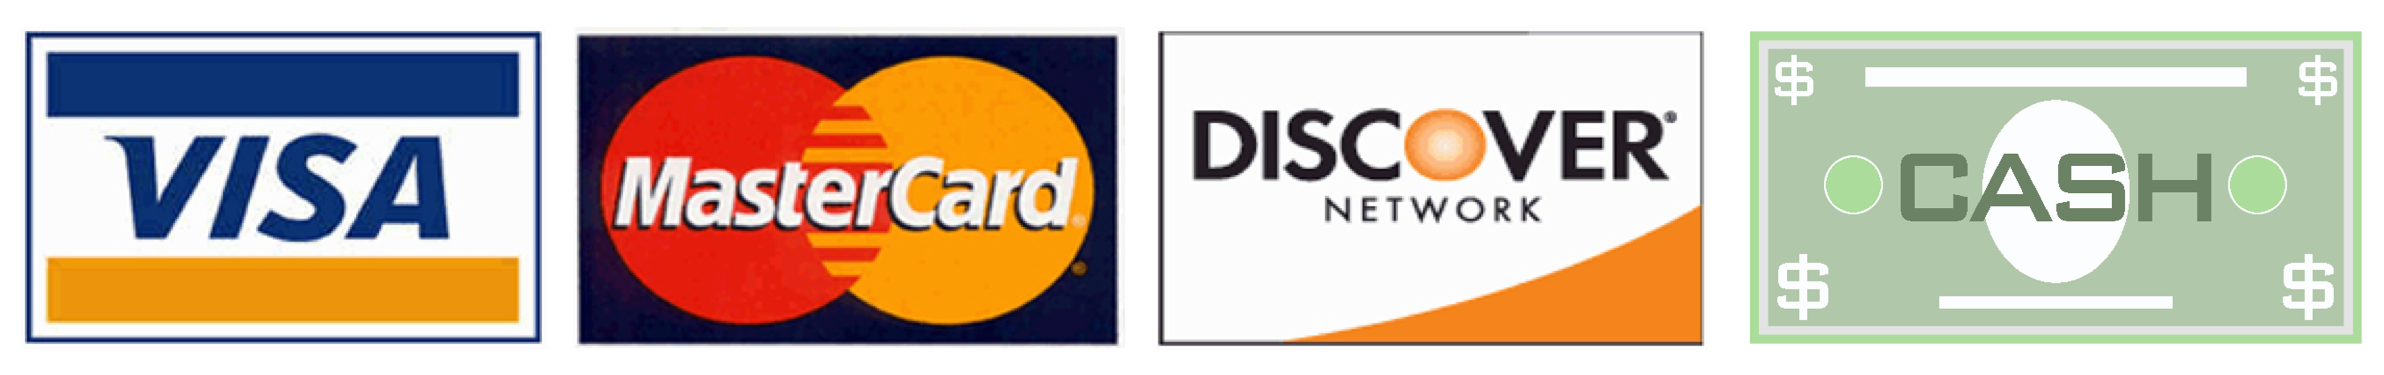 Ccard. Discover логотип. Visa MASTERCARD Триколор ТВ. Discover банк. Discover Card.